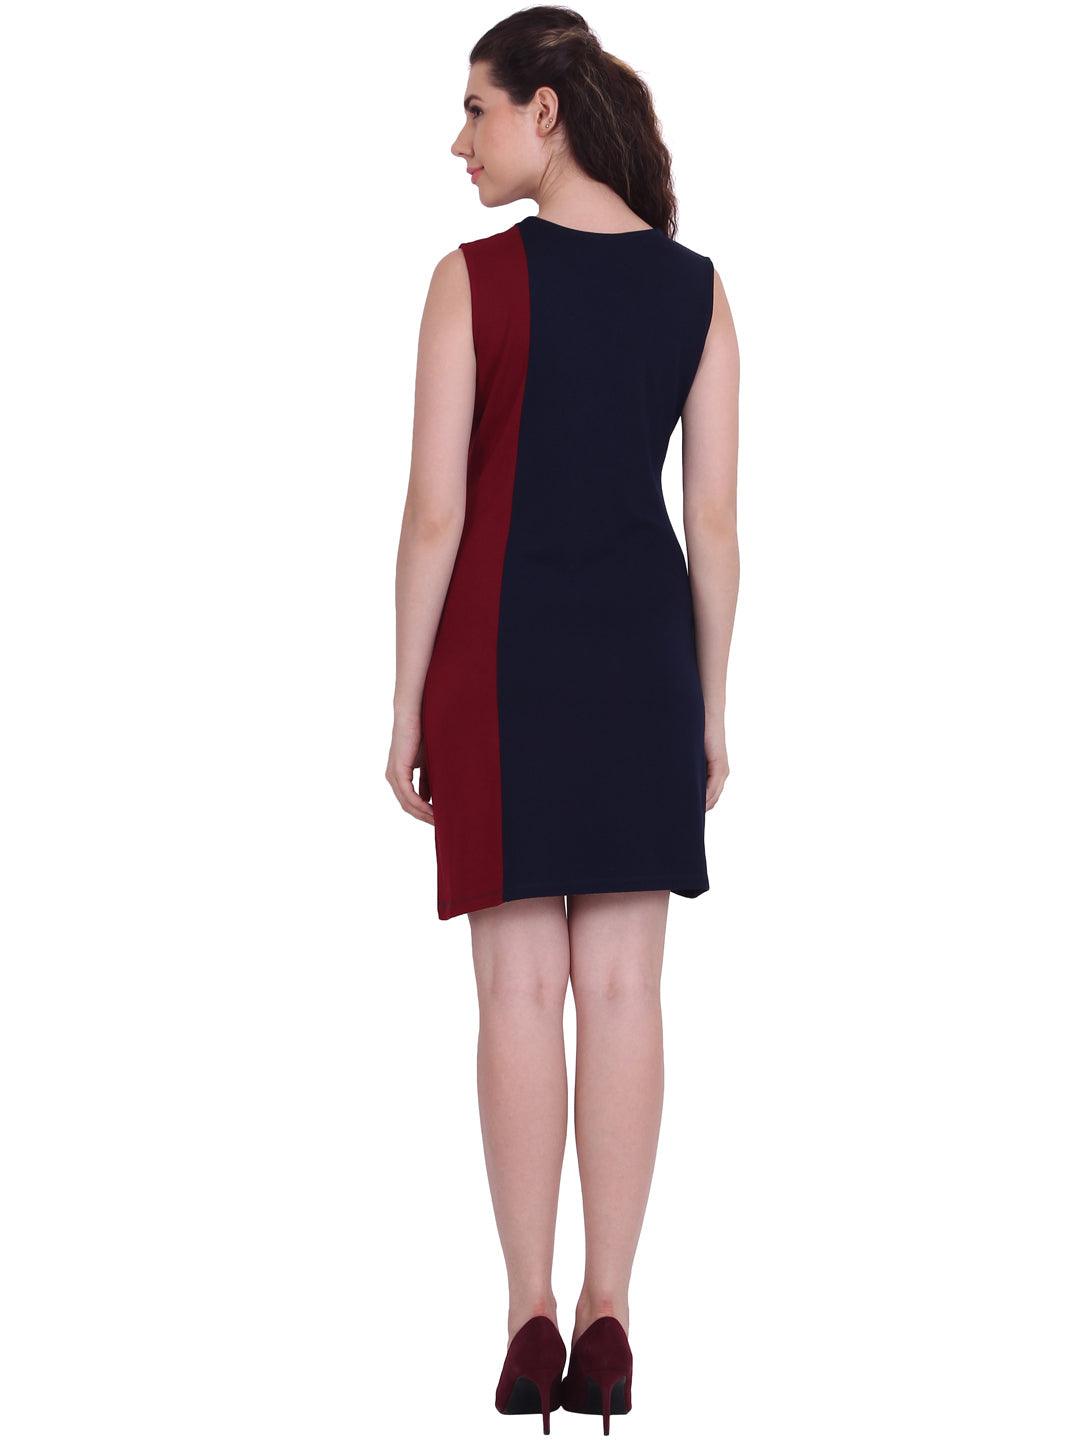 Red and Black Sleeveless Dress - Znxclothing